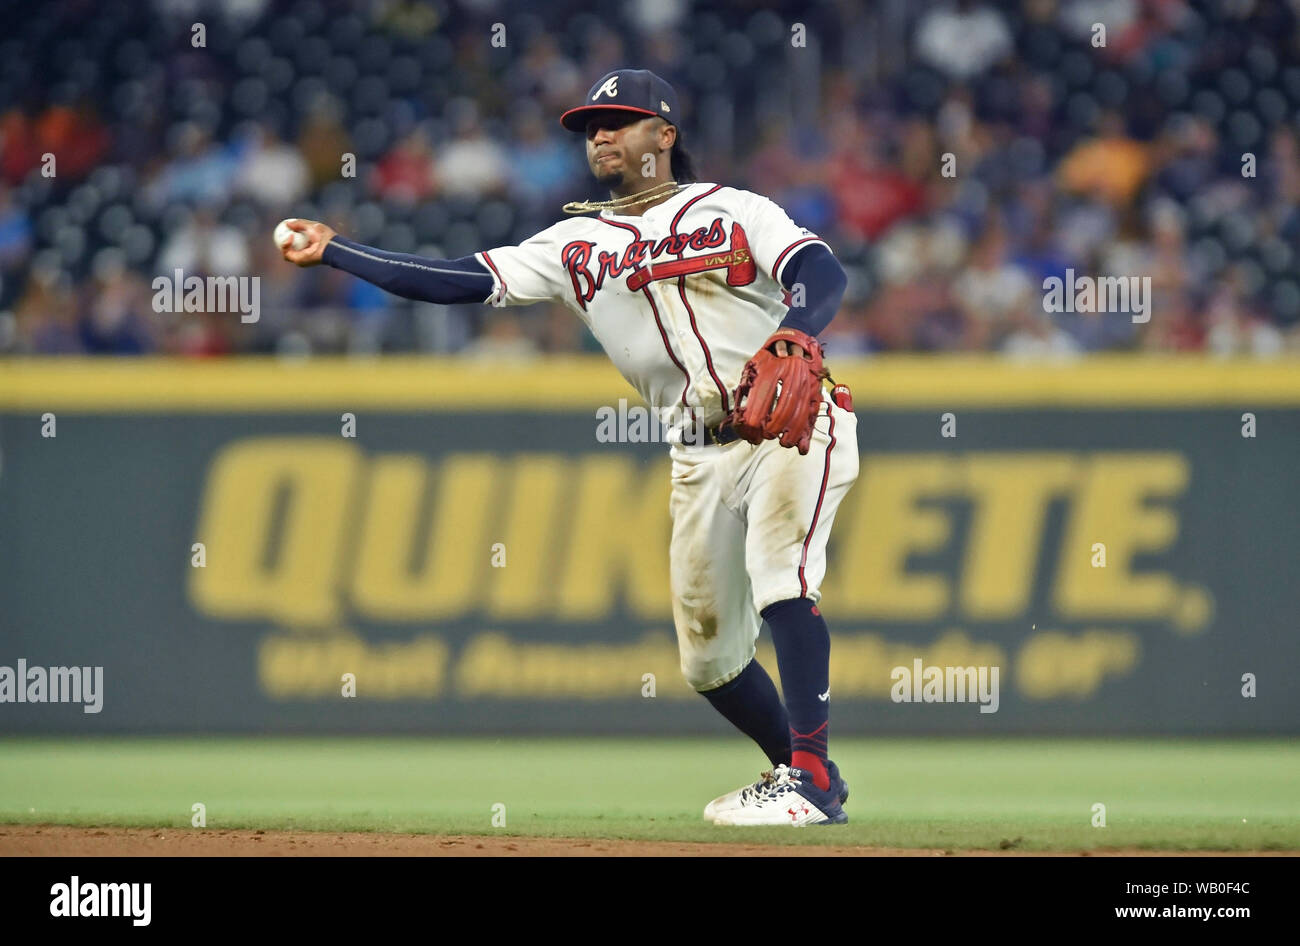 August 21, 2019: Atlanta Braves second baseman Ozzie Albies makes